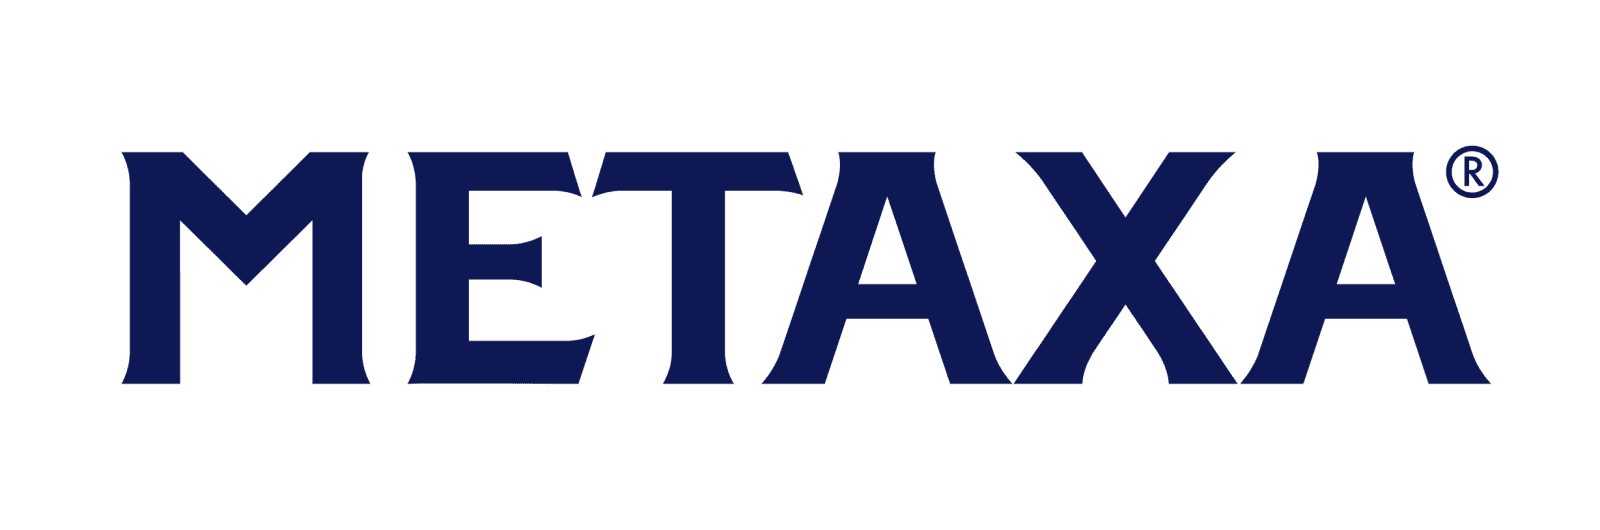 metaxa-web